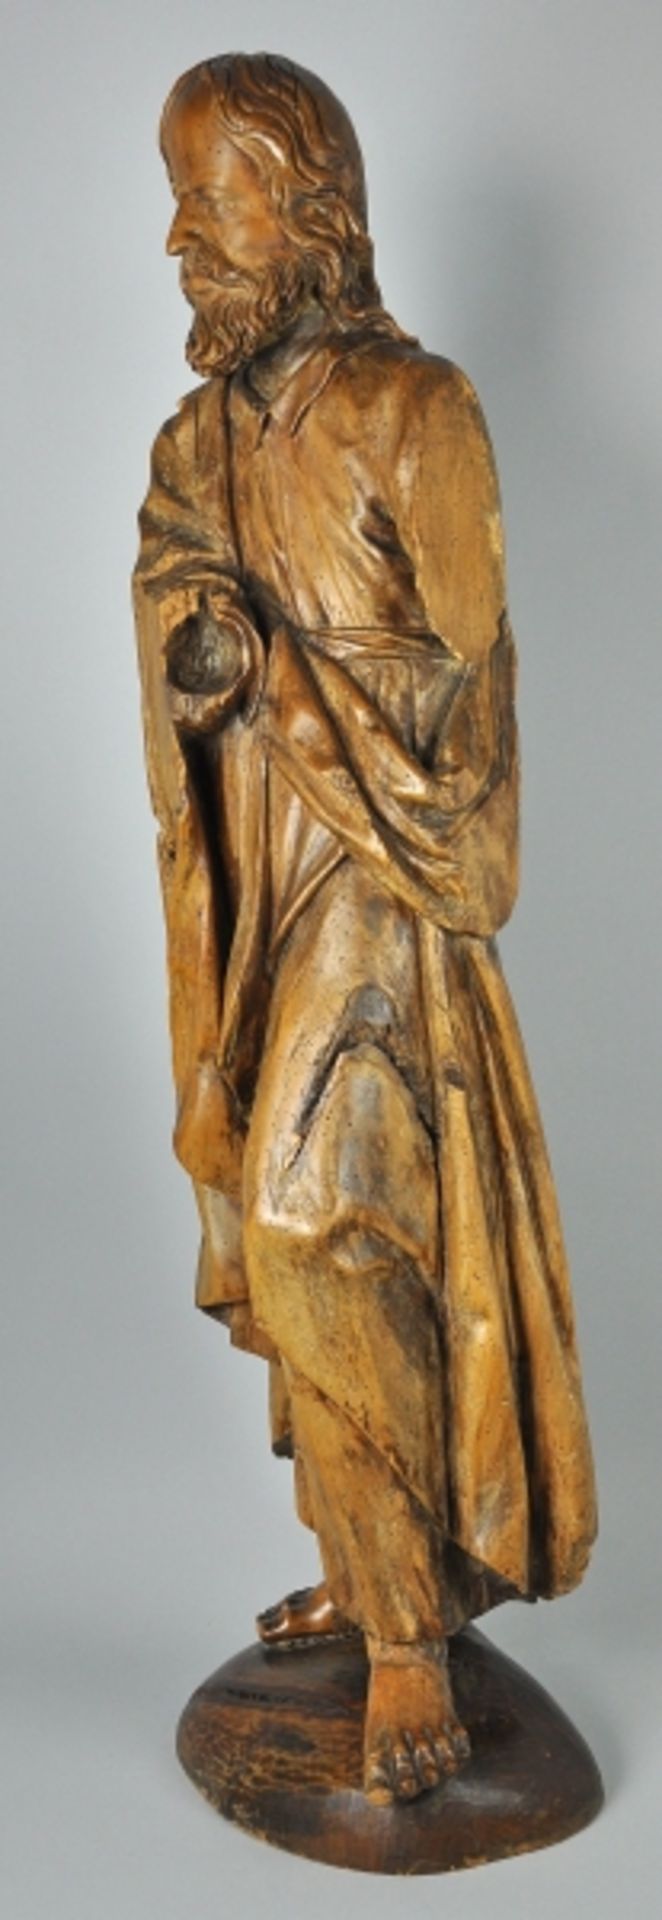 CHRISTUS 3/4 rund geschnitzte Holzfigur, Rückseite gehöhlt, 17./18.Jh, auf späterer ovaler Basis, - Image 5 of 7